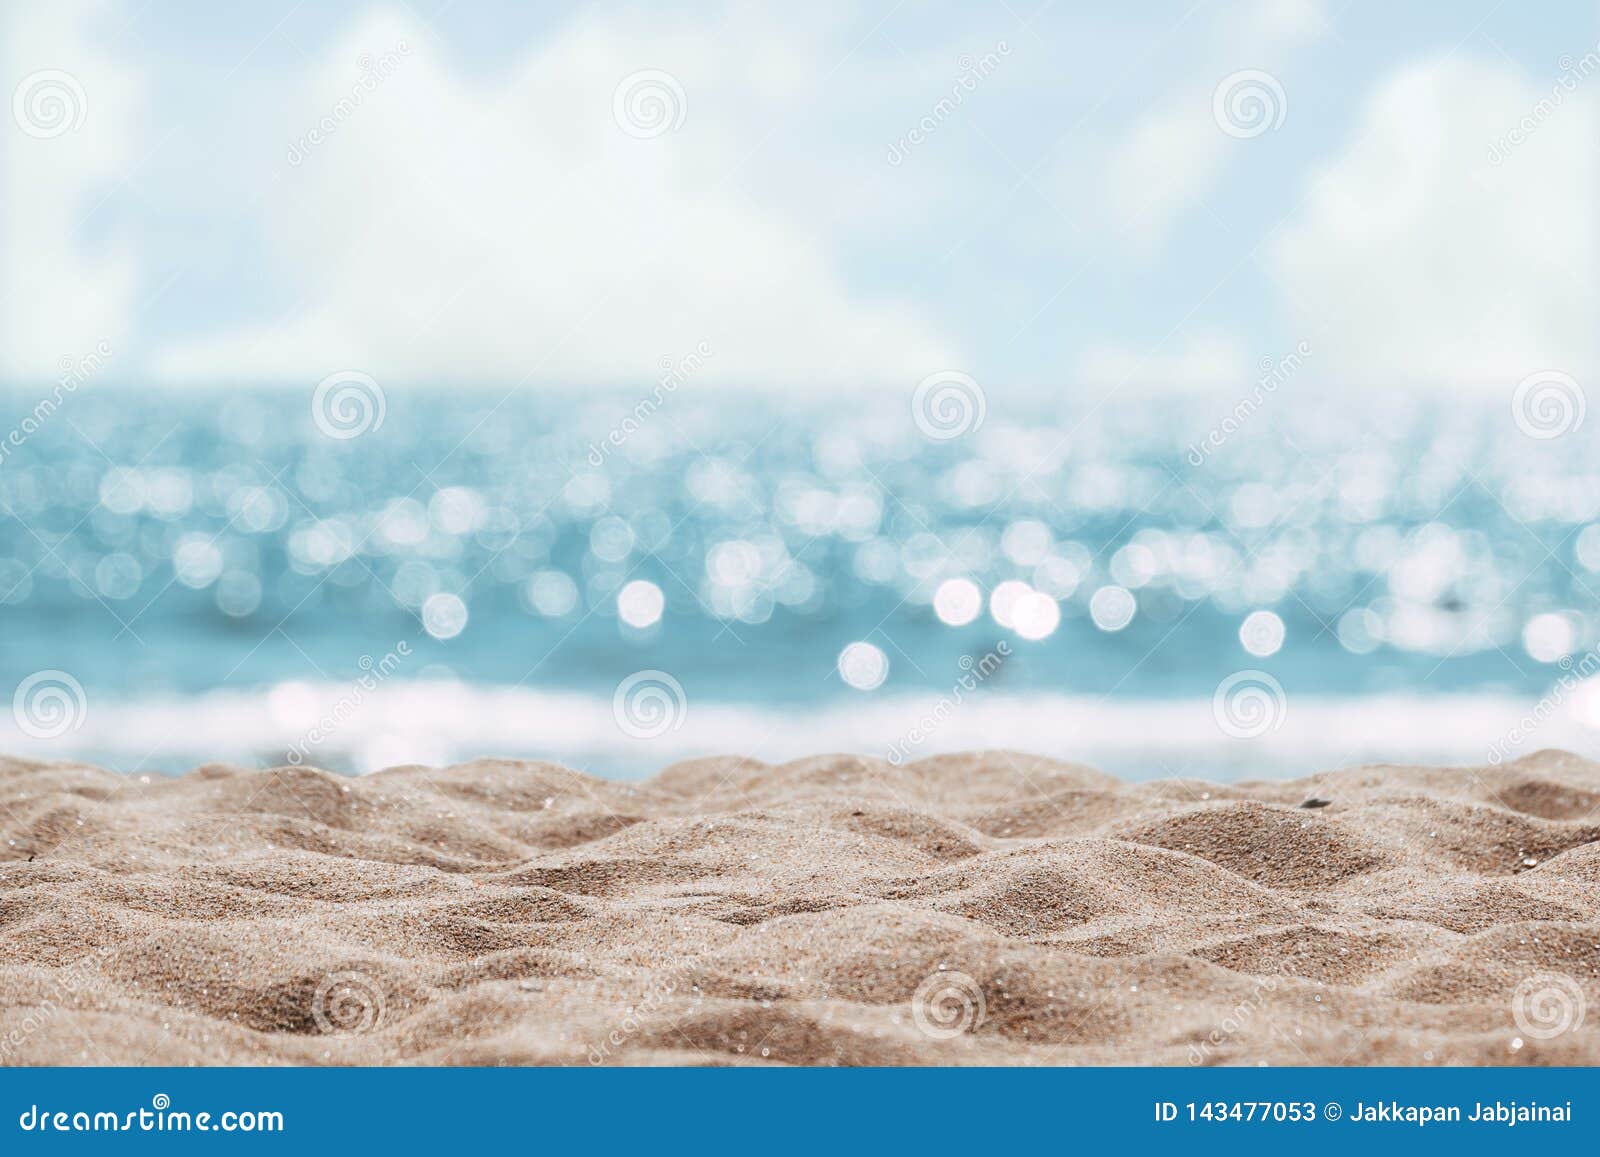 Seascape Abstract Beach Background. Blur Bokeh Light of Calm Sea ...